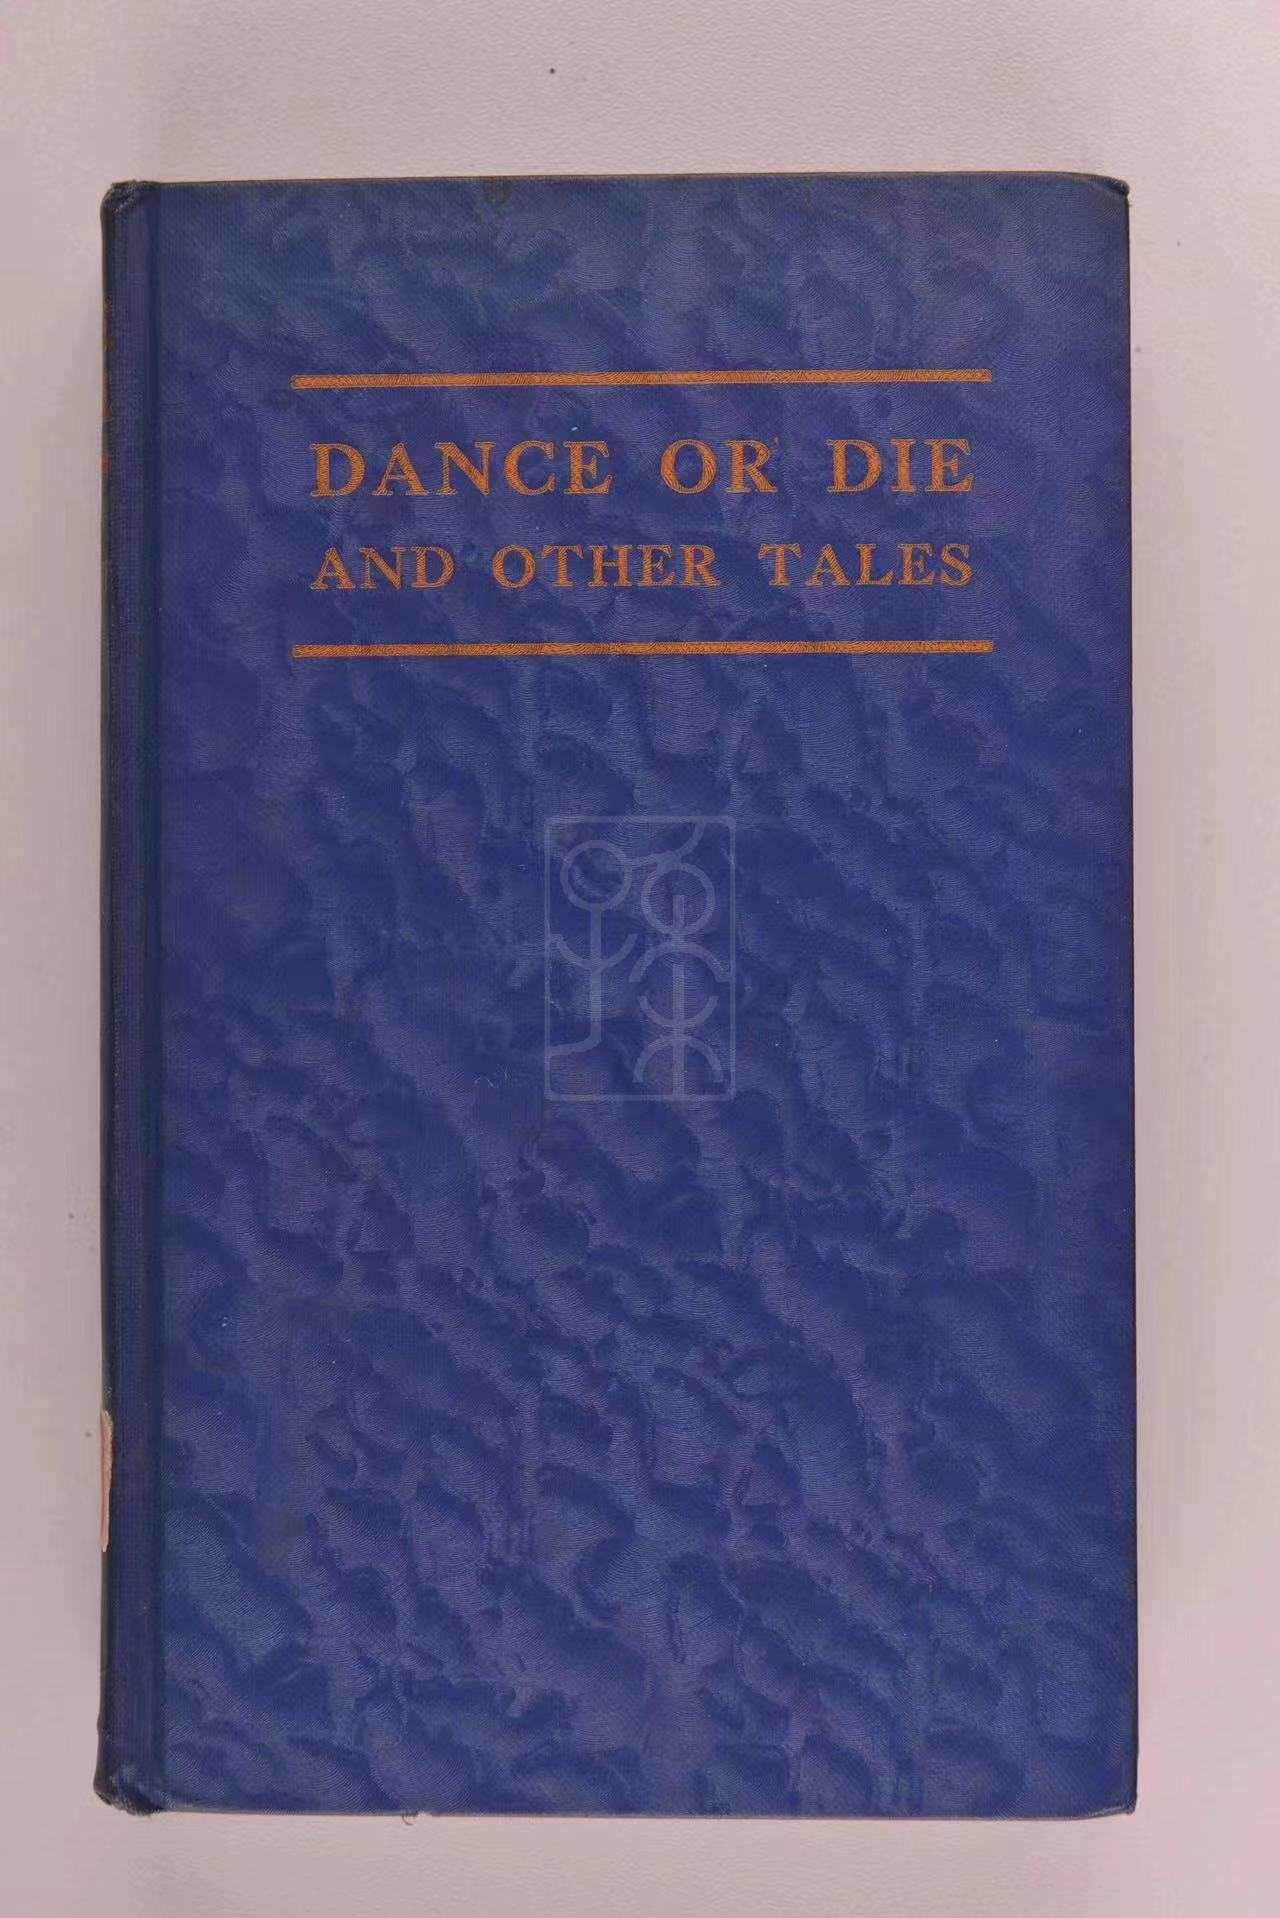 1937年版《艾佛雷特作品集——跳舞或死亡及其他》（Dance or Die and Other Tales）